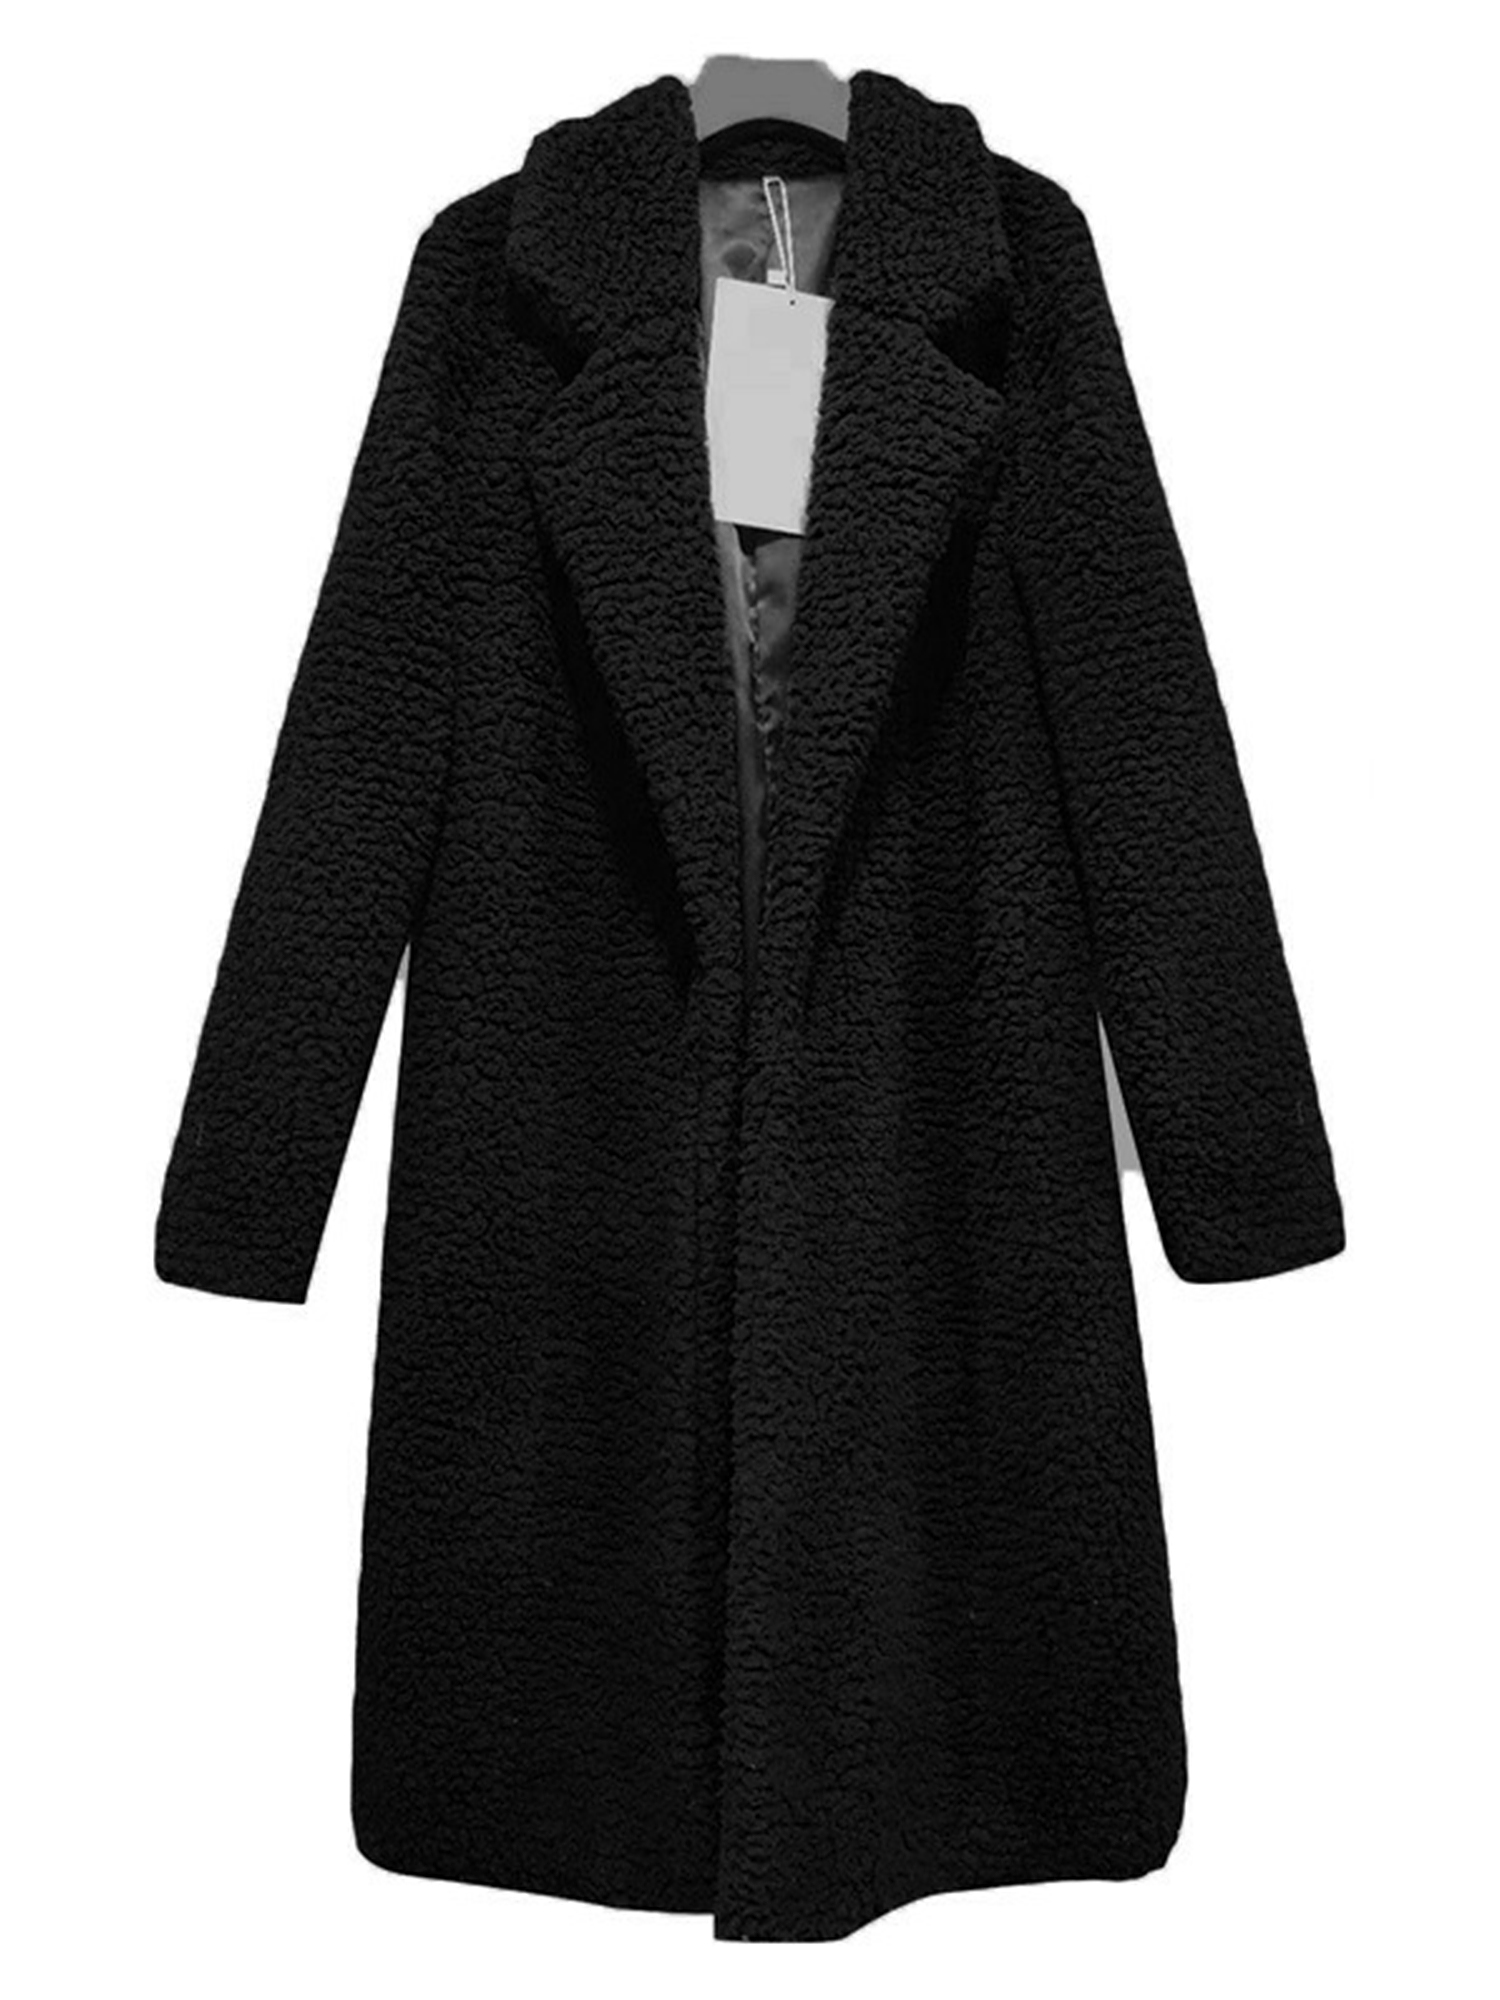 Classic Vintage Women Oversized Winter Warm Fluffy Fleece Long Trench Outwear Jacket Coat Ladies Fashion Borg Long Knee Loose Overcoat Coat Faux Fur Jacket Lapel Outwear Outfit - image 1 of 3